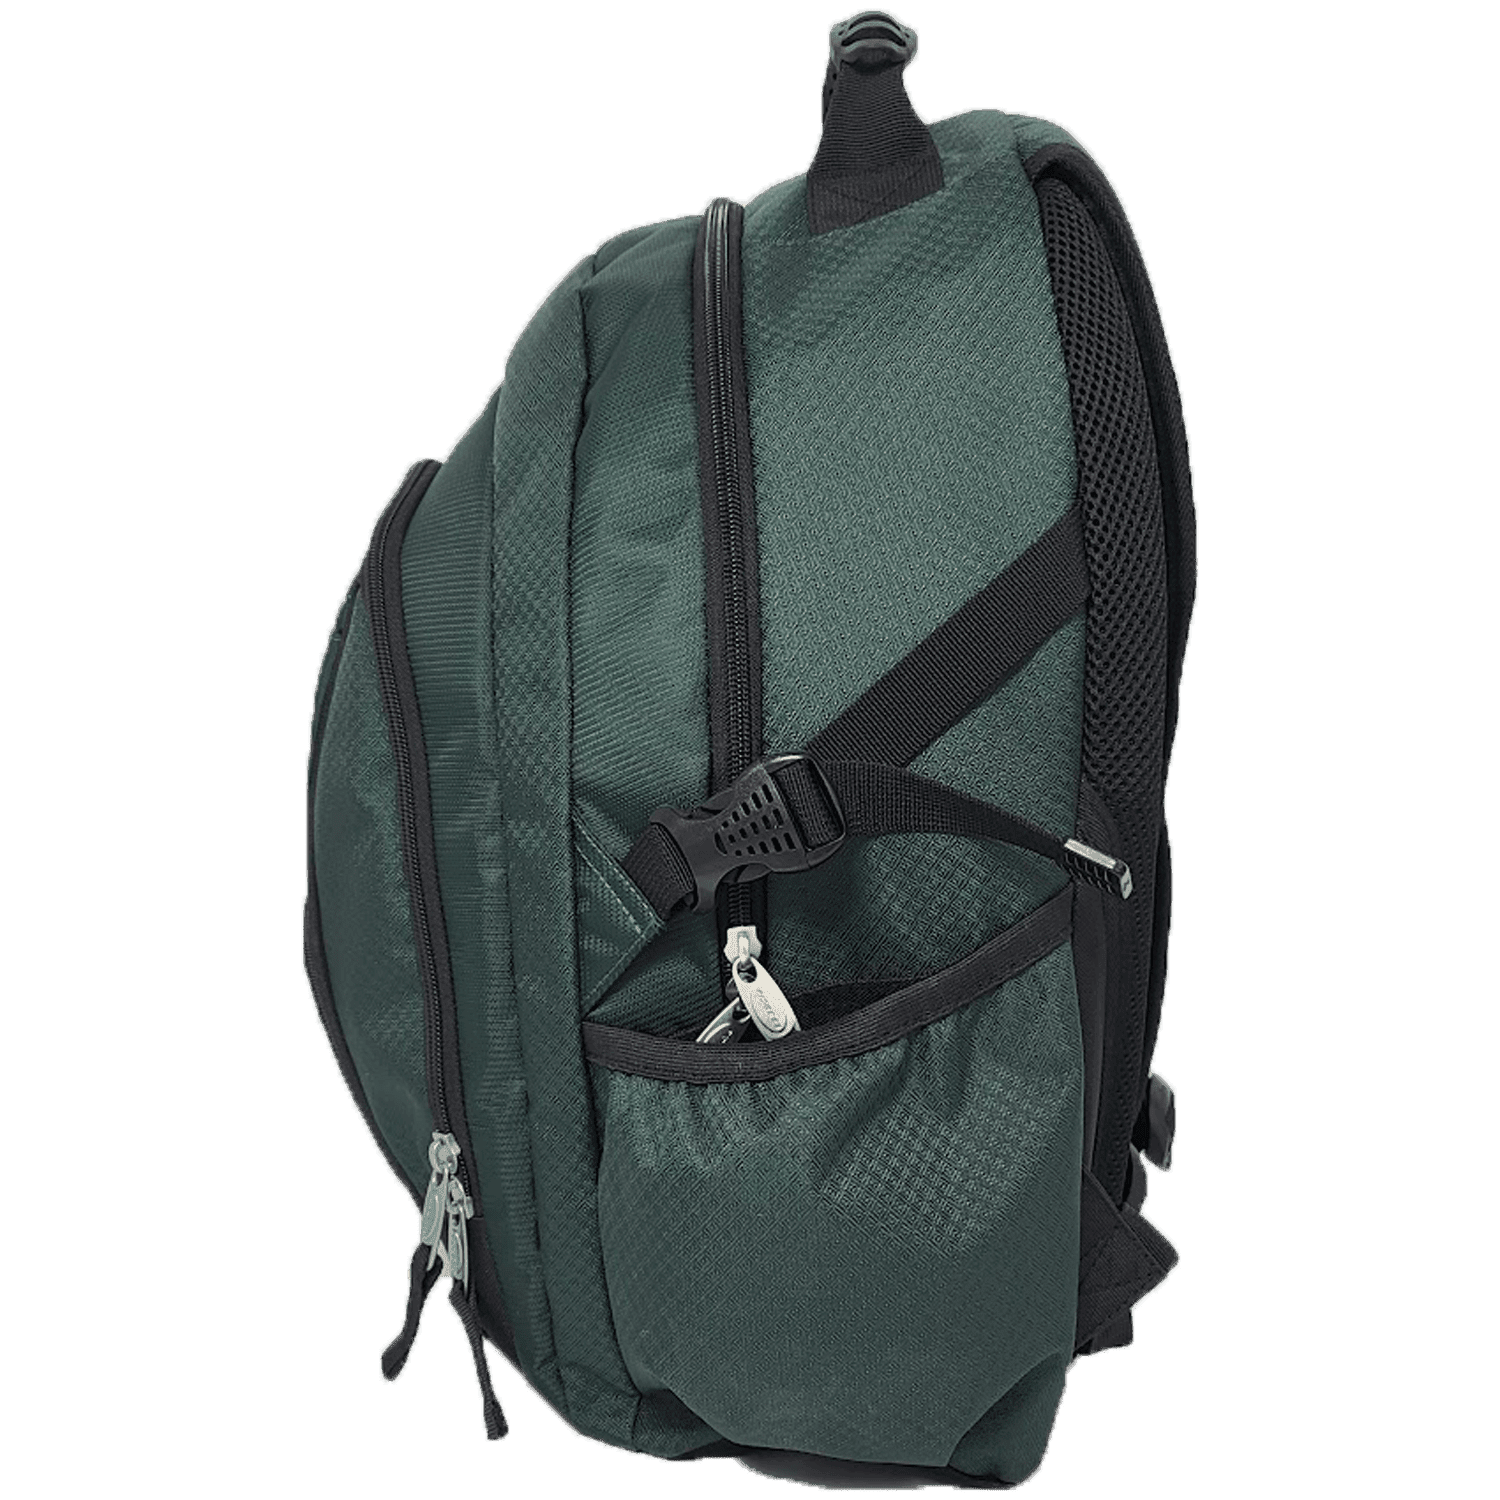 Sportech Ridge 53 – Bolton Backpack - Racing Green 3 Shaws Department Stores